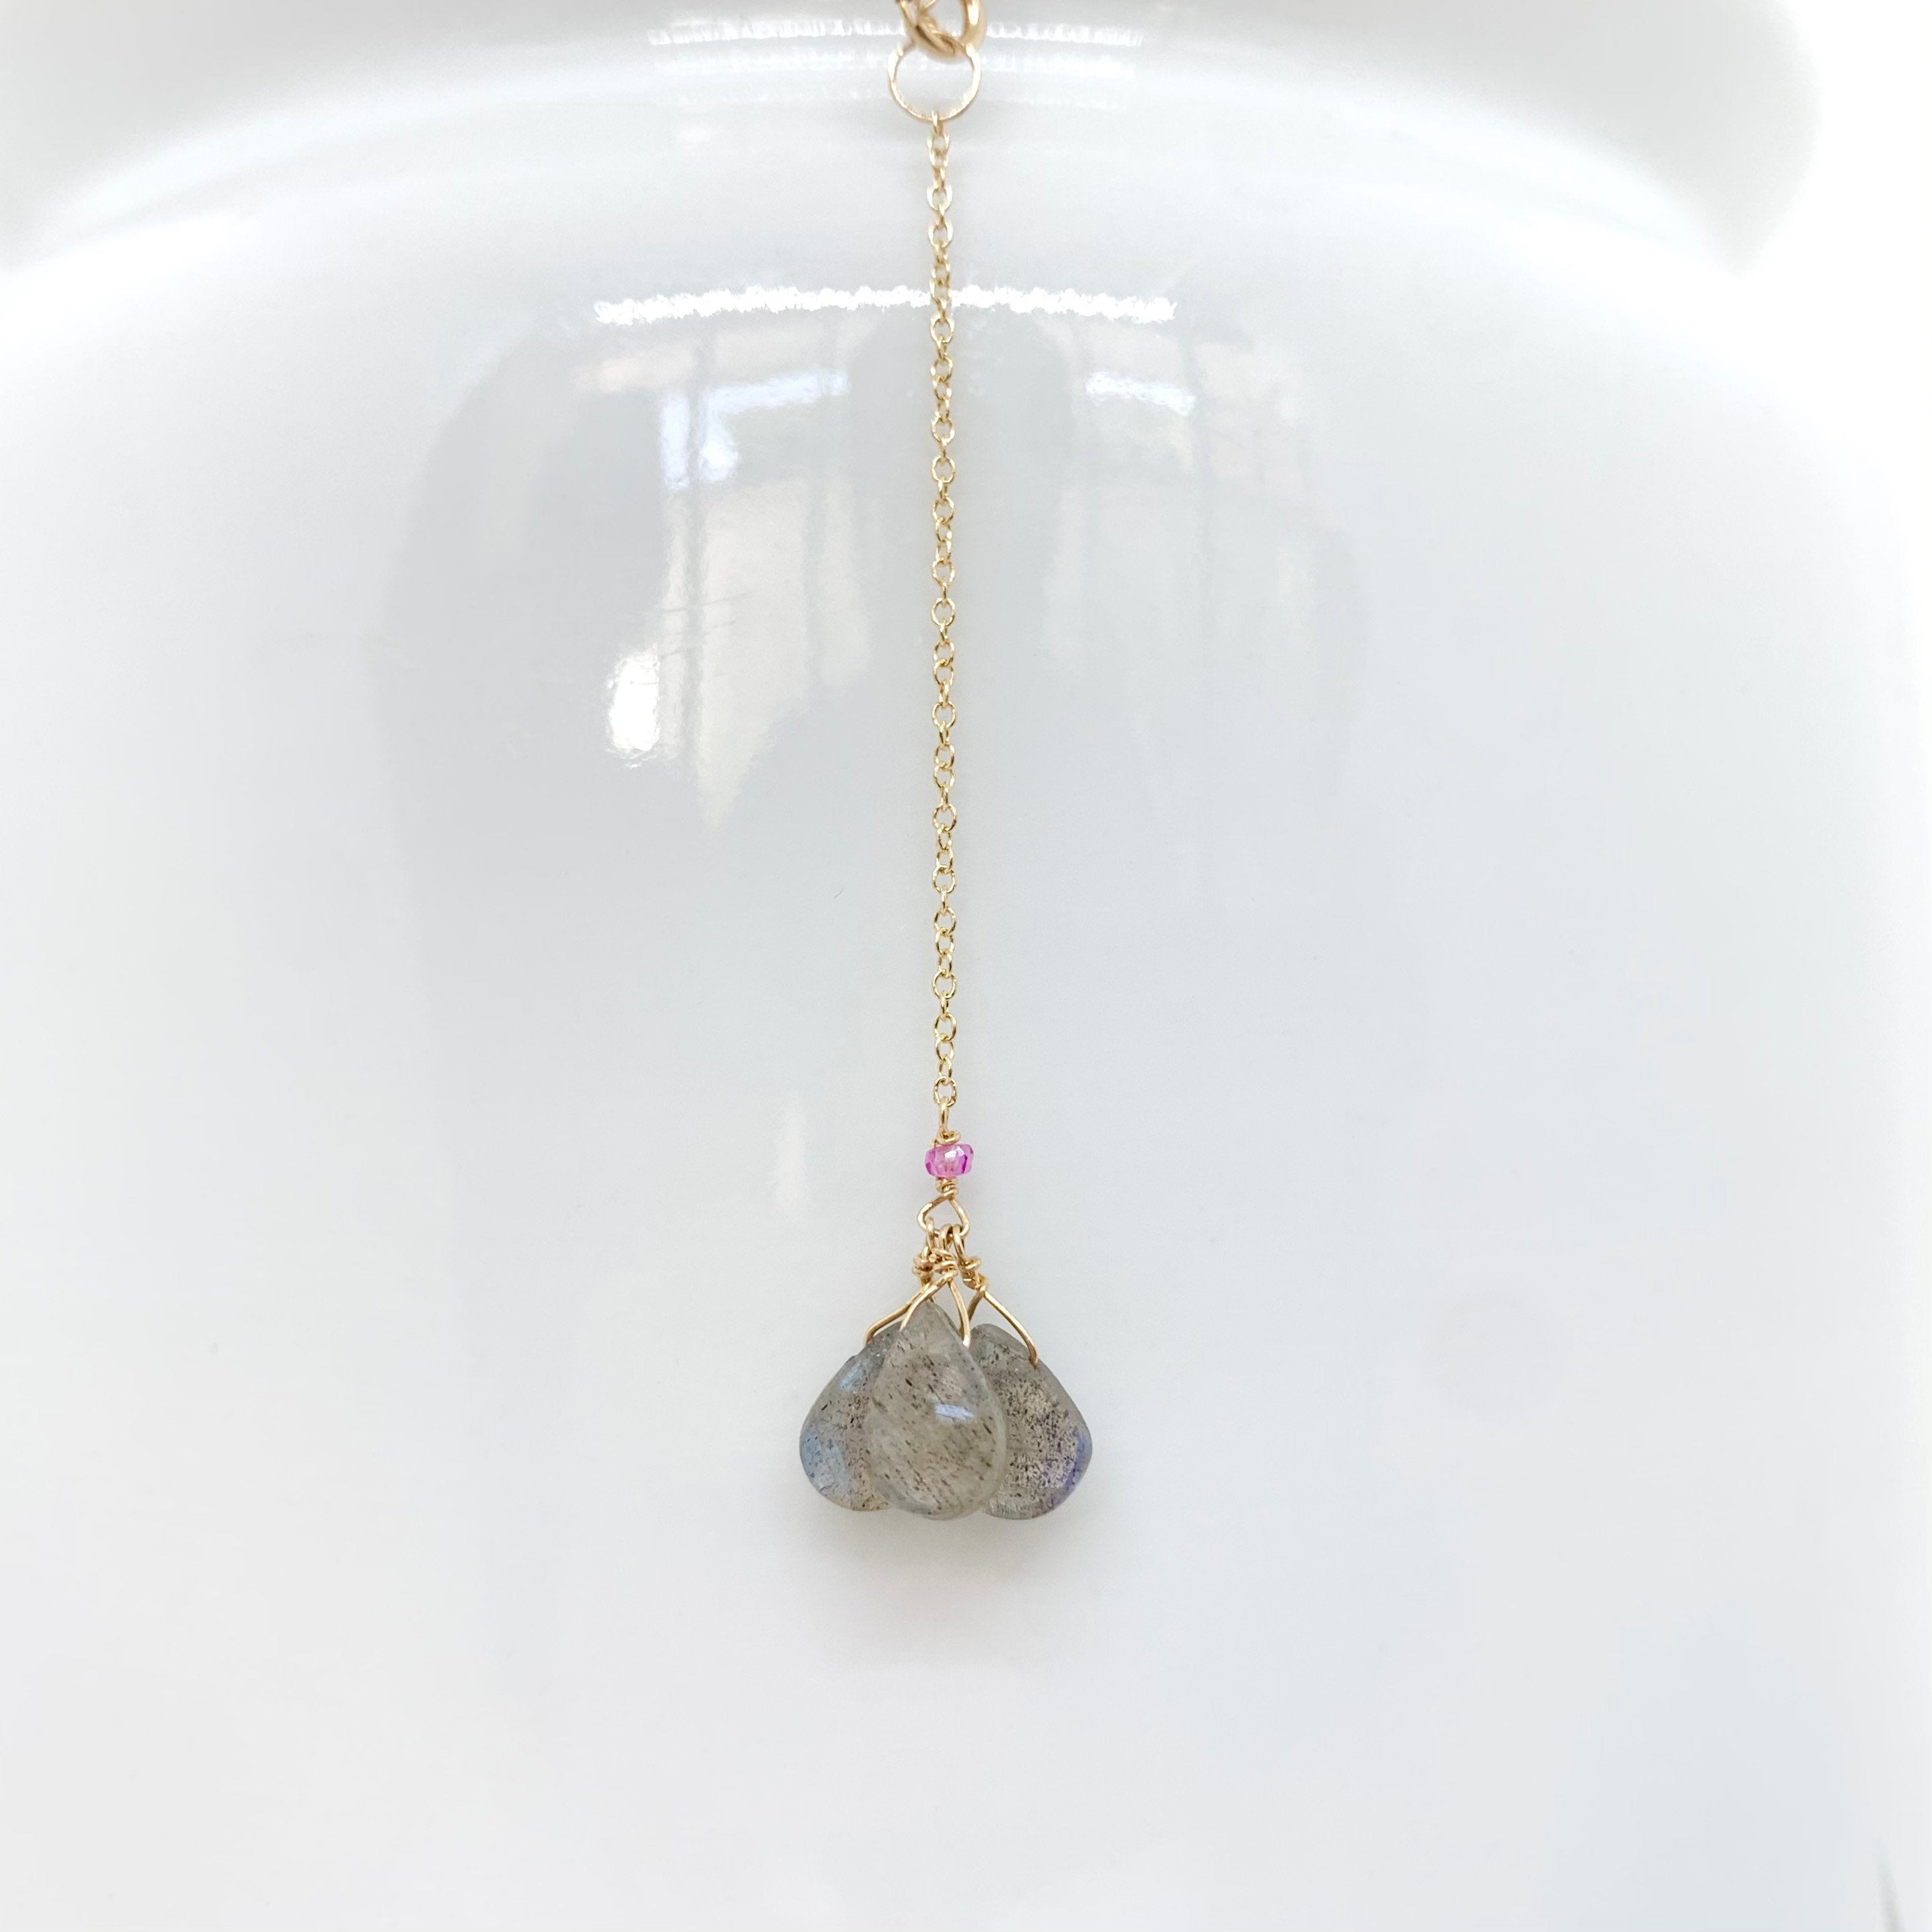 14k Gold Chain Necklace w/ Labradorite Pendant, 18k Gold Pendant & 18k Gold Nuggets